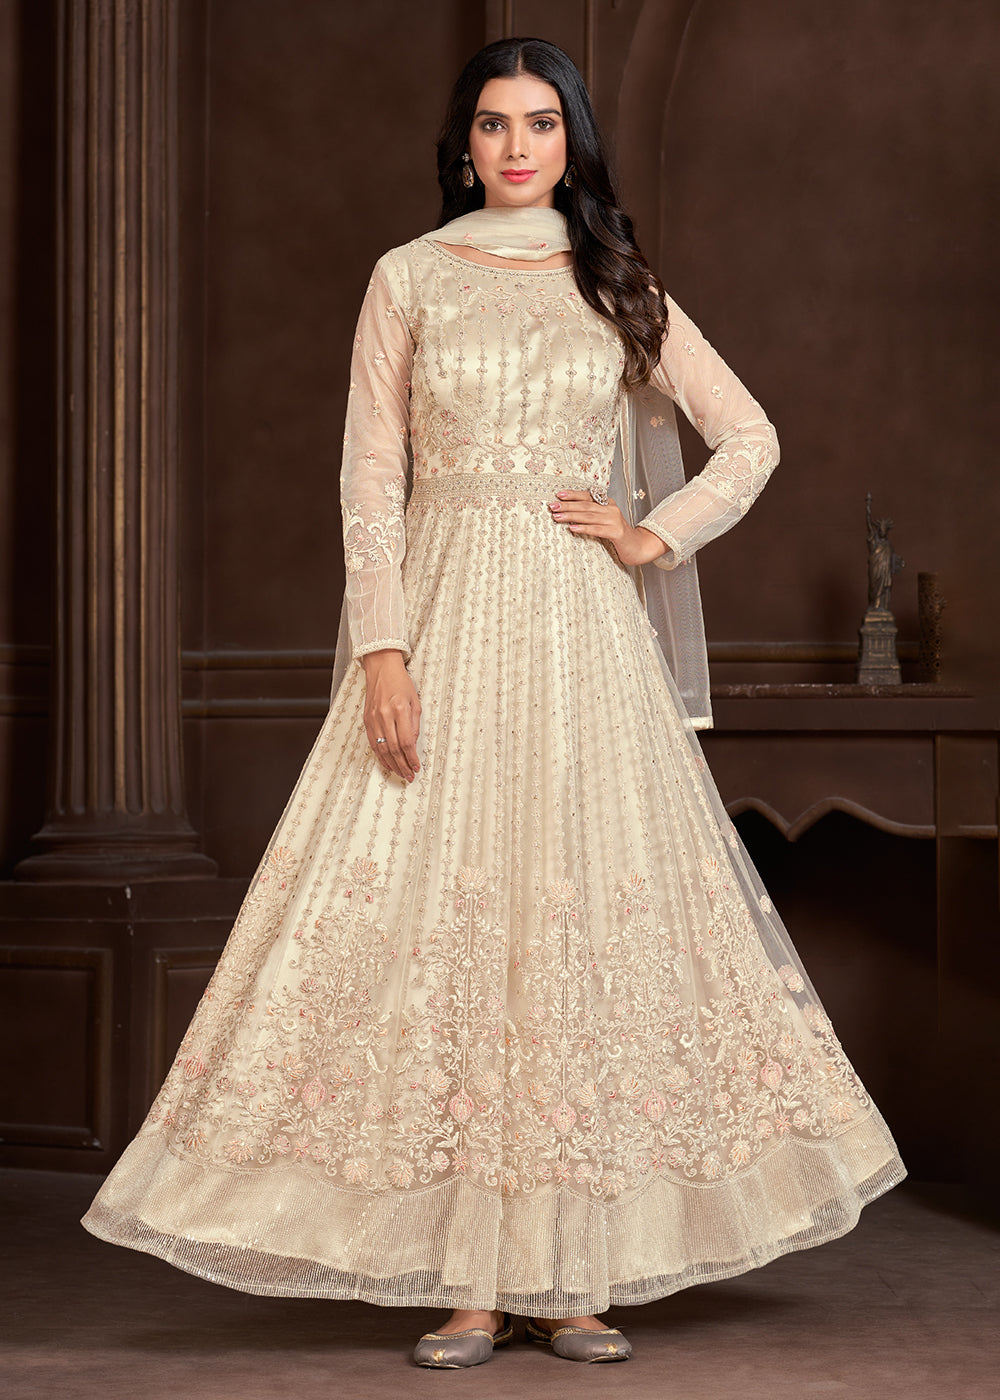 Buy Now Elegant Off White Butterfly Net Designer Anarkali Suit Online in USA, UK, Australia, New Zealand, Canada & Worldwide at Empress Clothing.